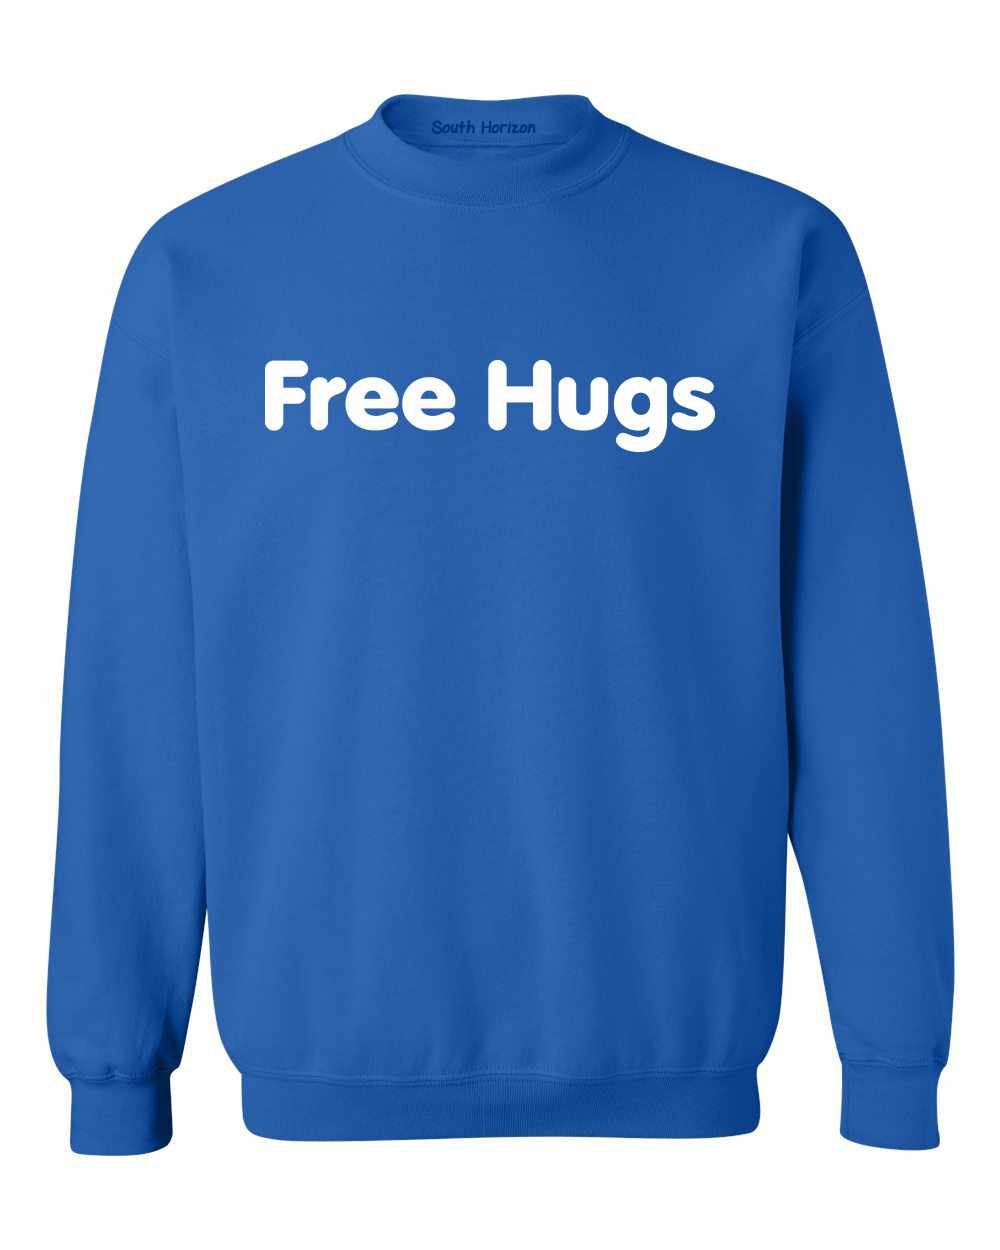 Free Hugs on SweatShirt (#626-11)